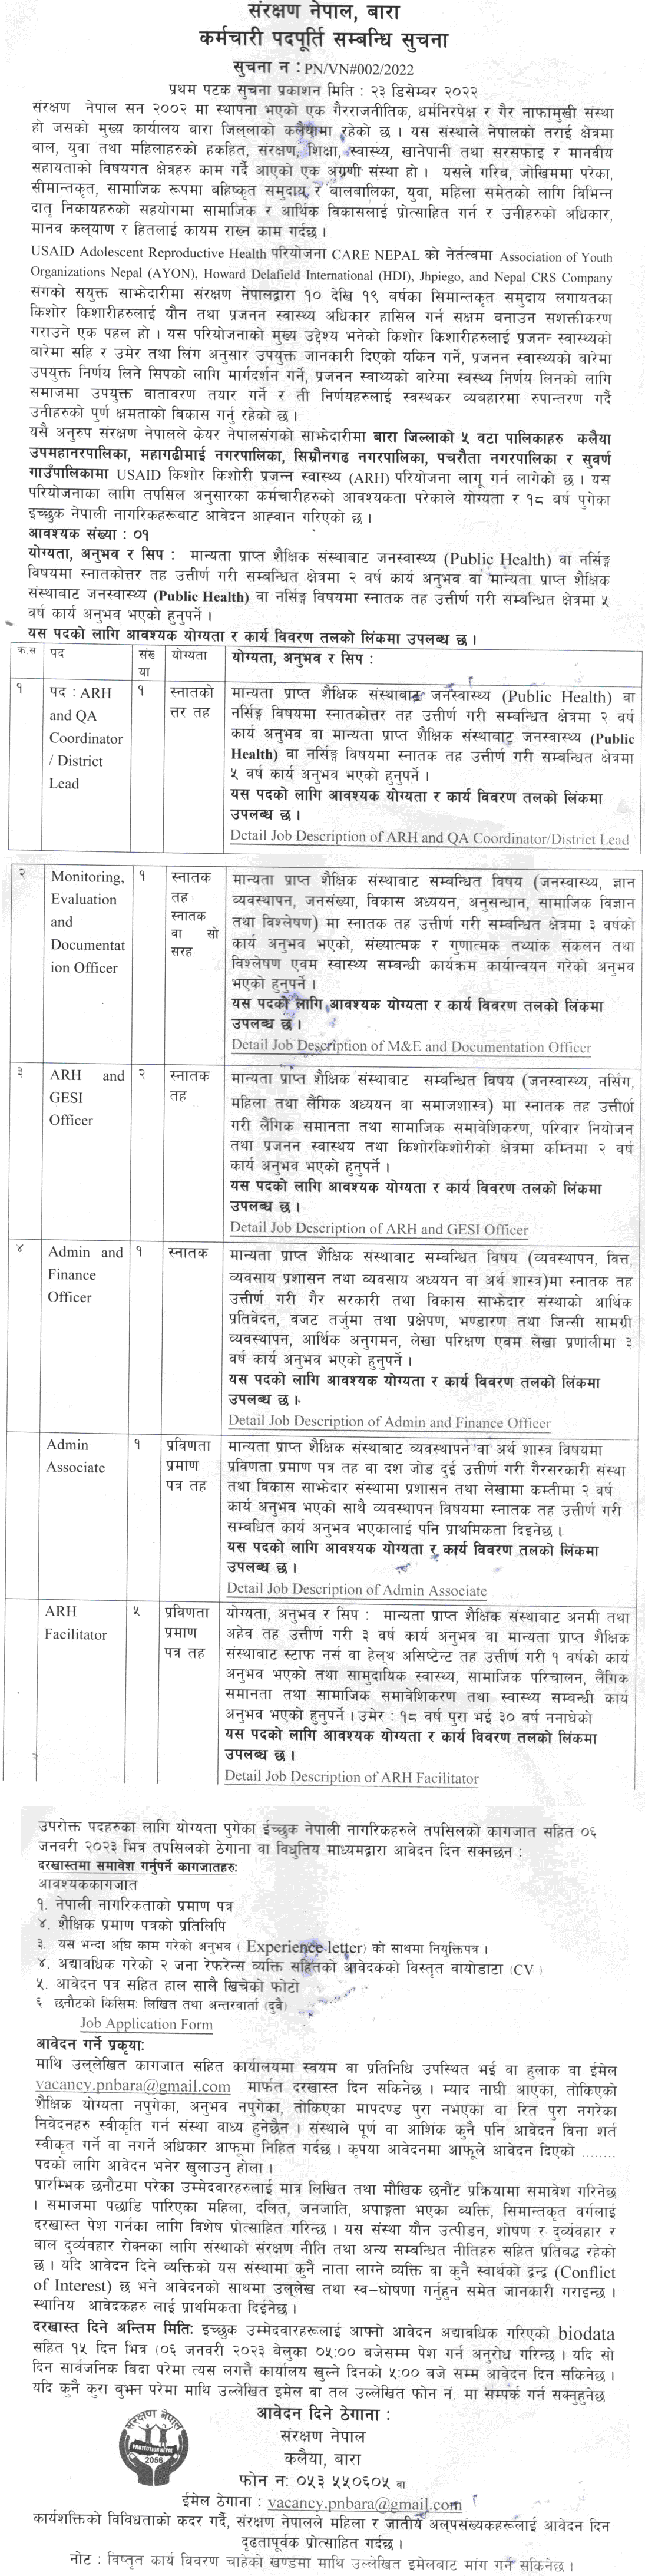 Sanrakshan Nepal Vacancy for Various Positions